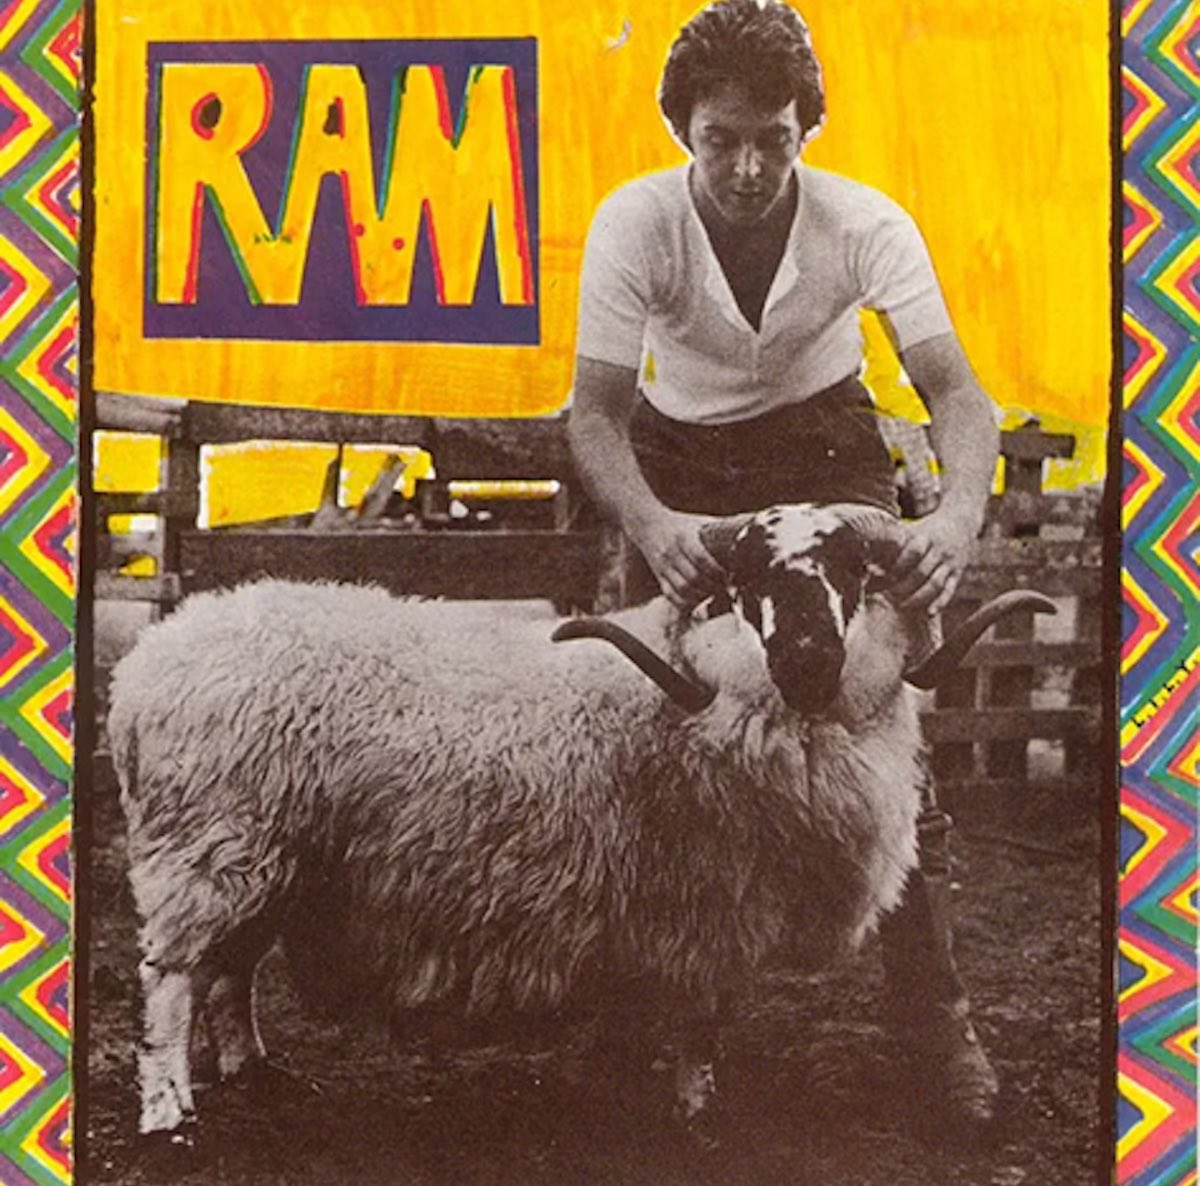 Happy 53rd birthday to Paul McCartney’s finest work. Love Ram.